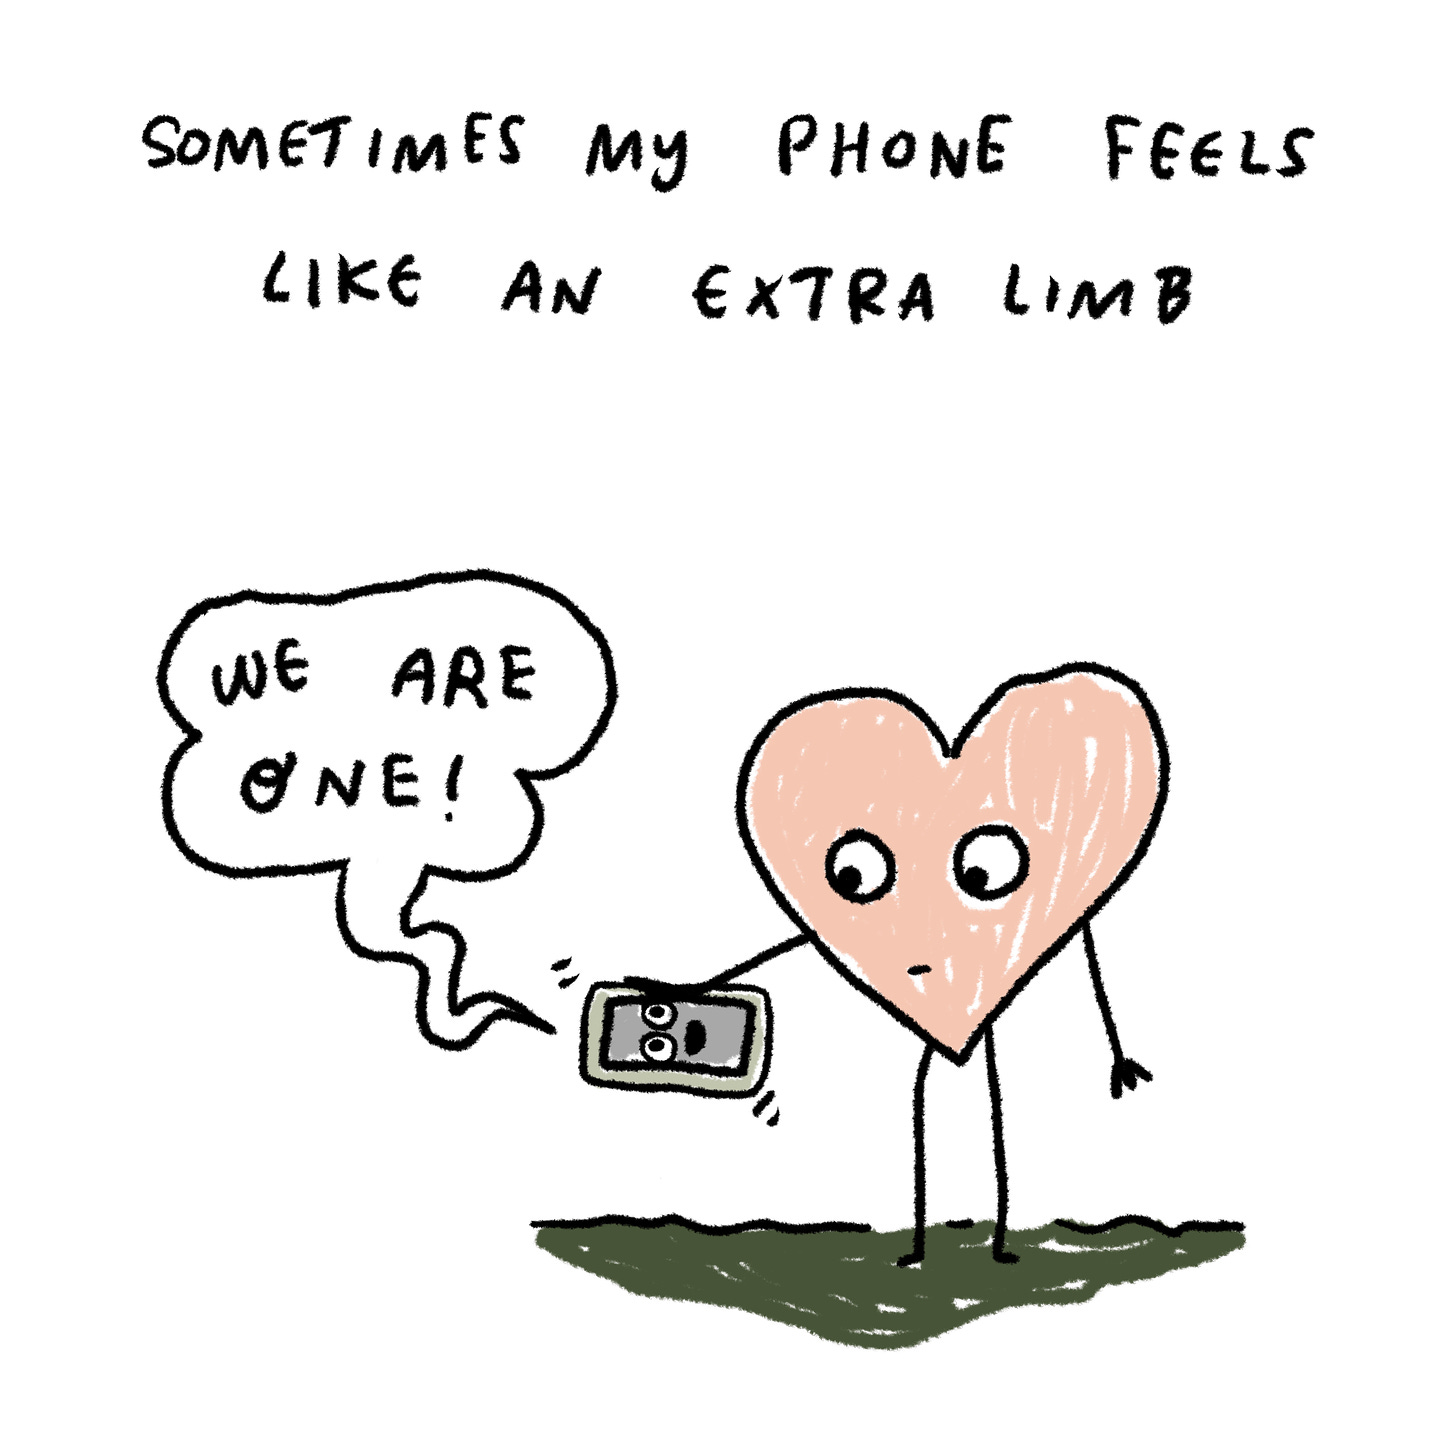 Sometimes my phone feels like an extra limb.